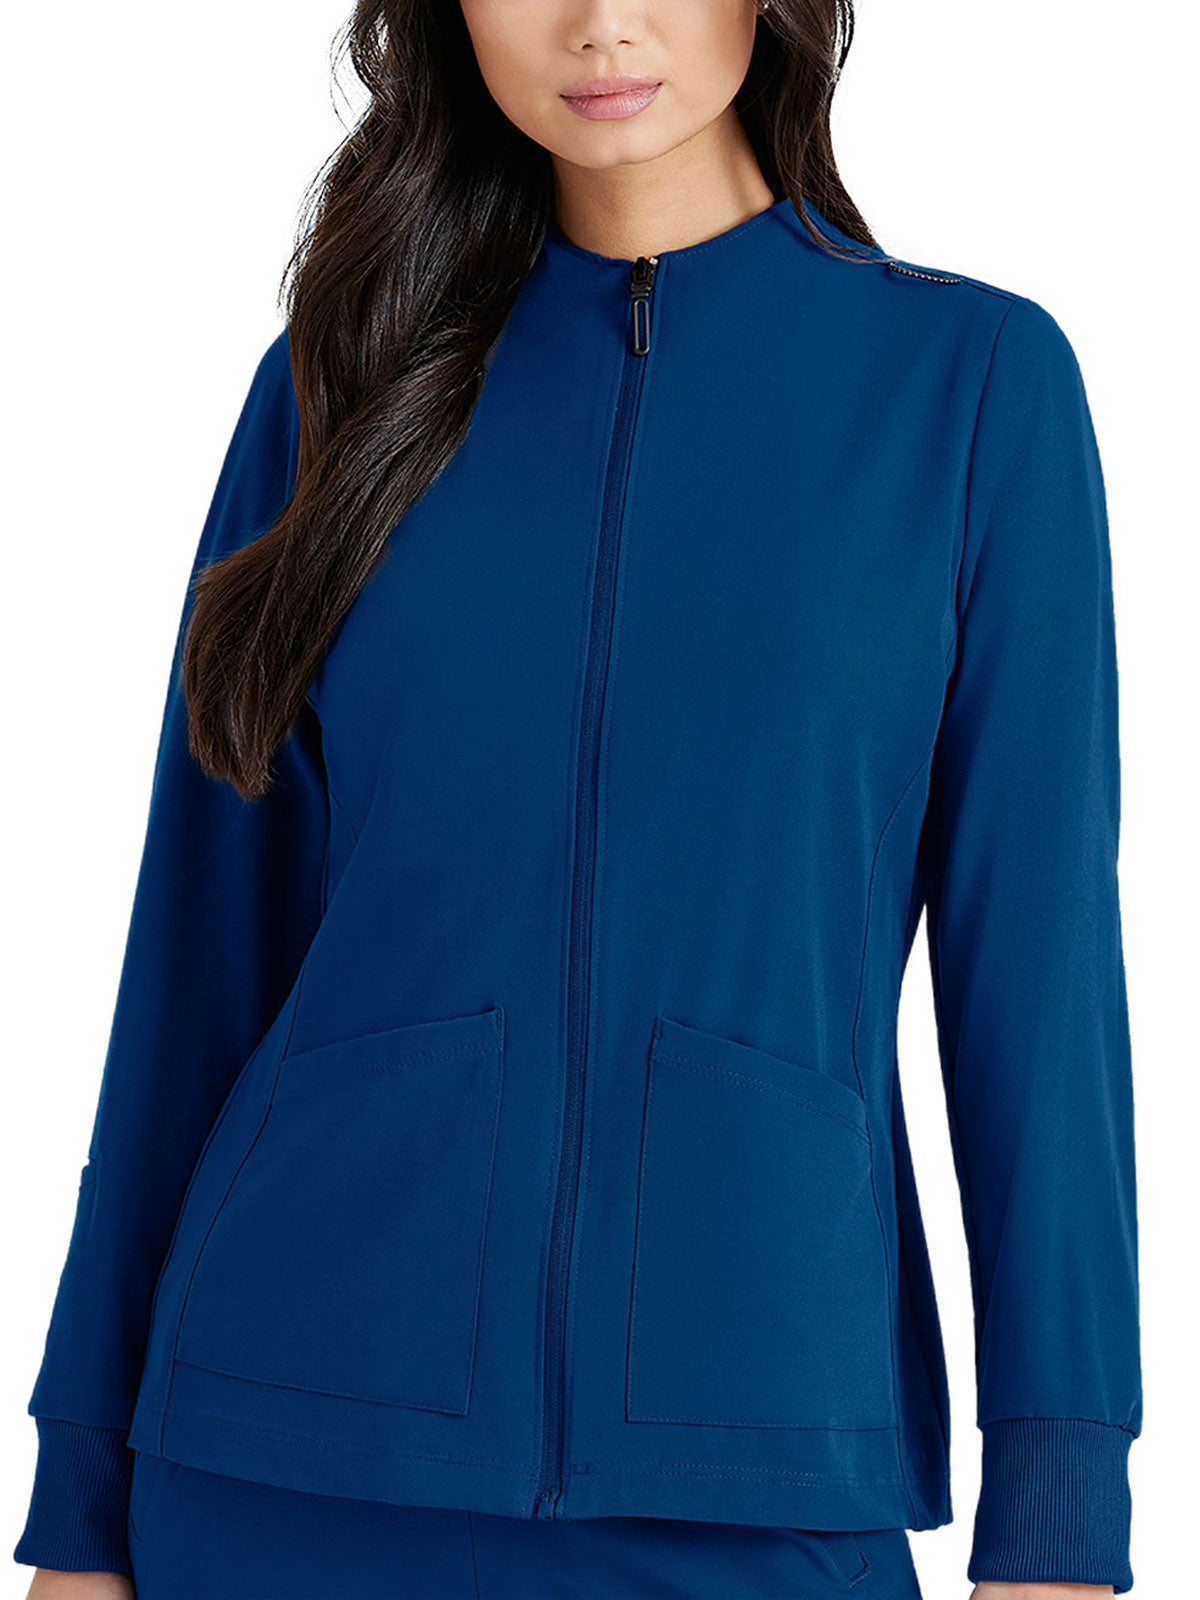 Barco one scrub jacket Unify - Women's Zip Front Warm Up Jacket – Scrubs  Uniforms